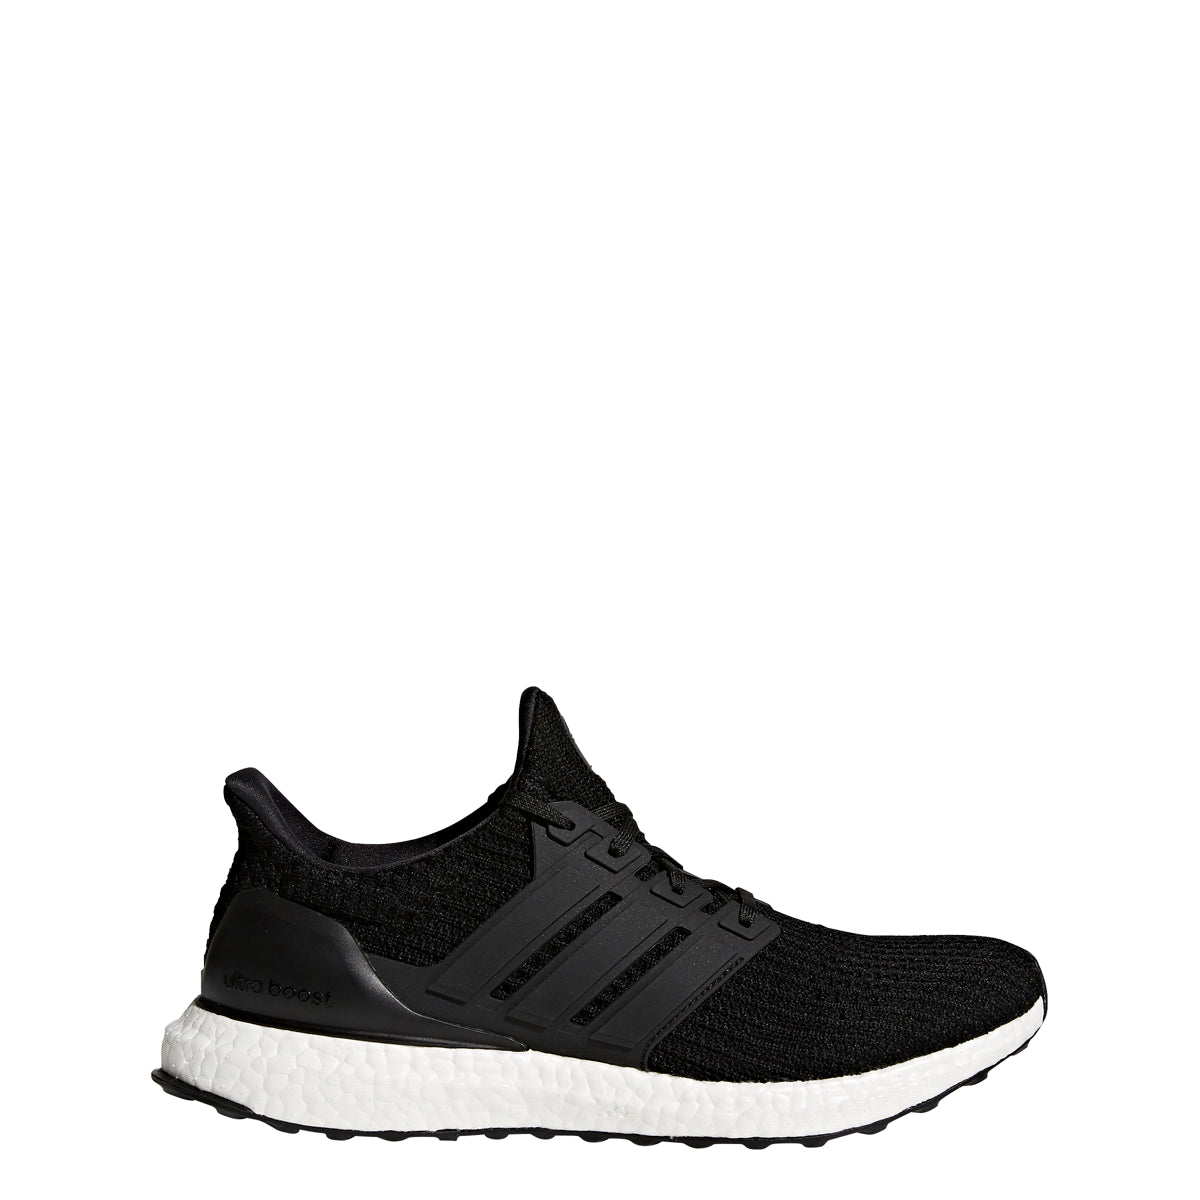 Adidas Men's Boost 4.0 Running Shoes - Black - Kratz Sporting Goods